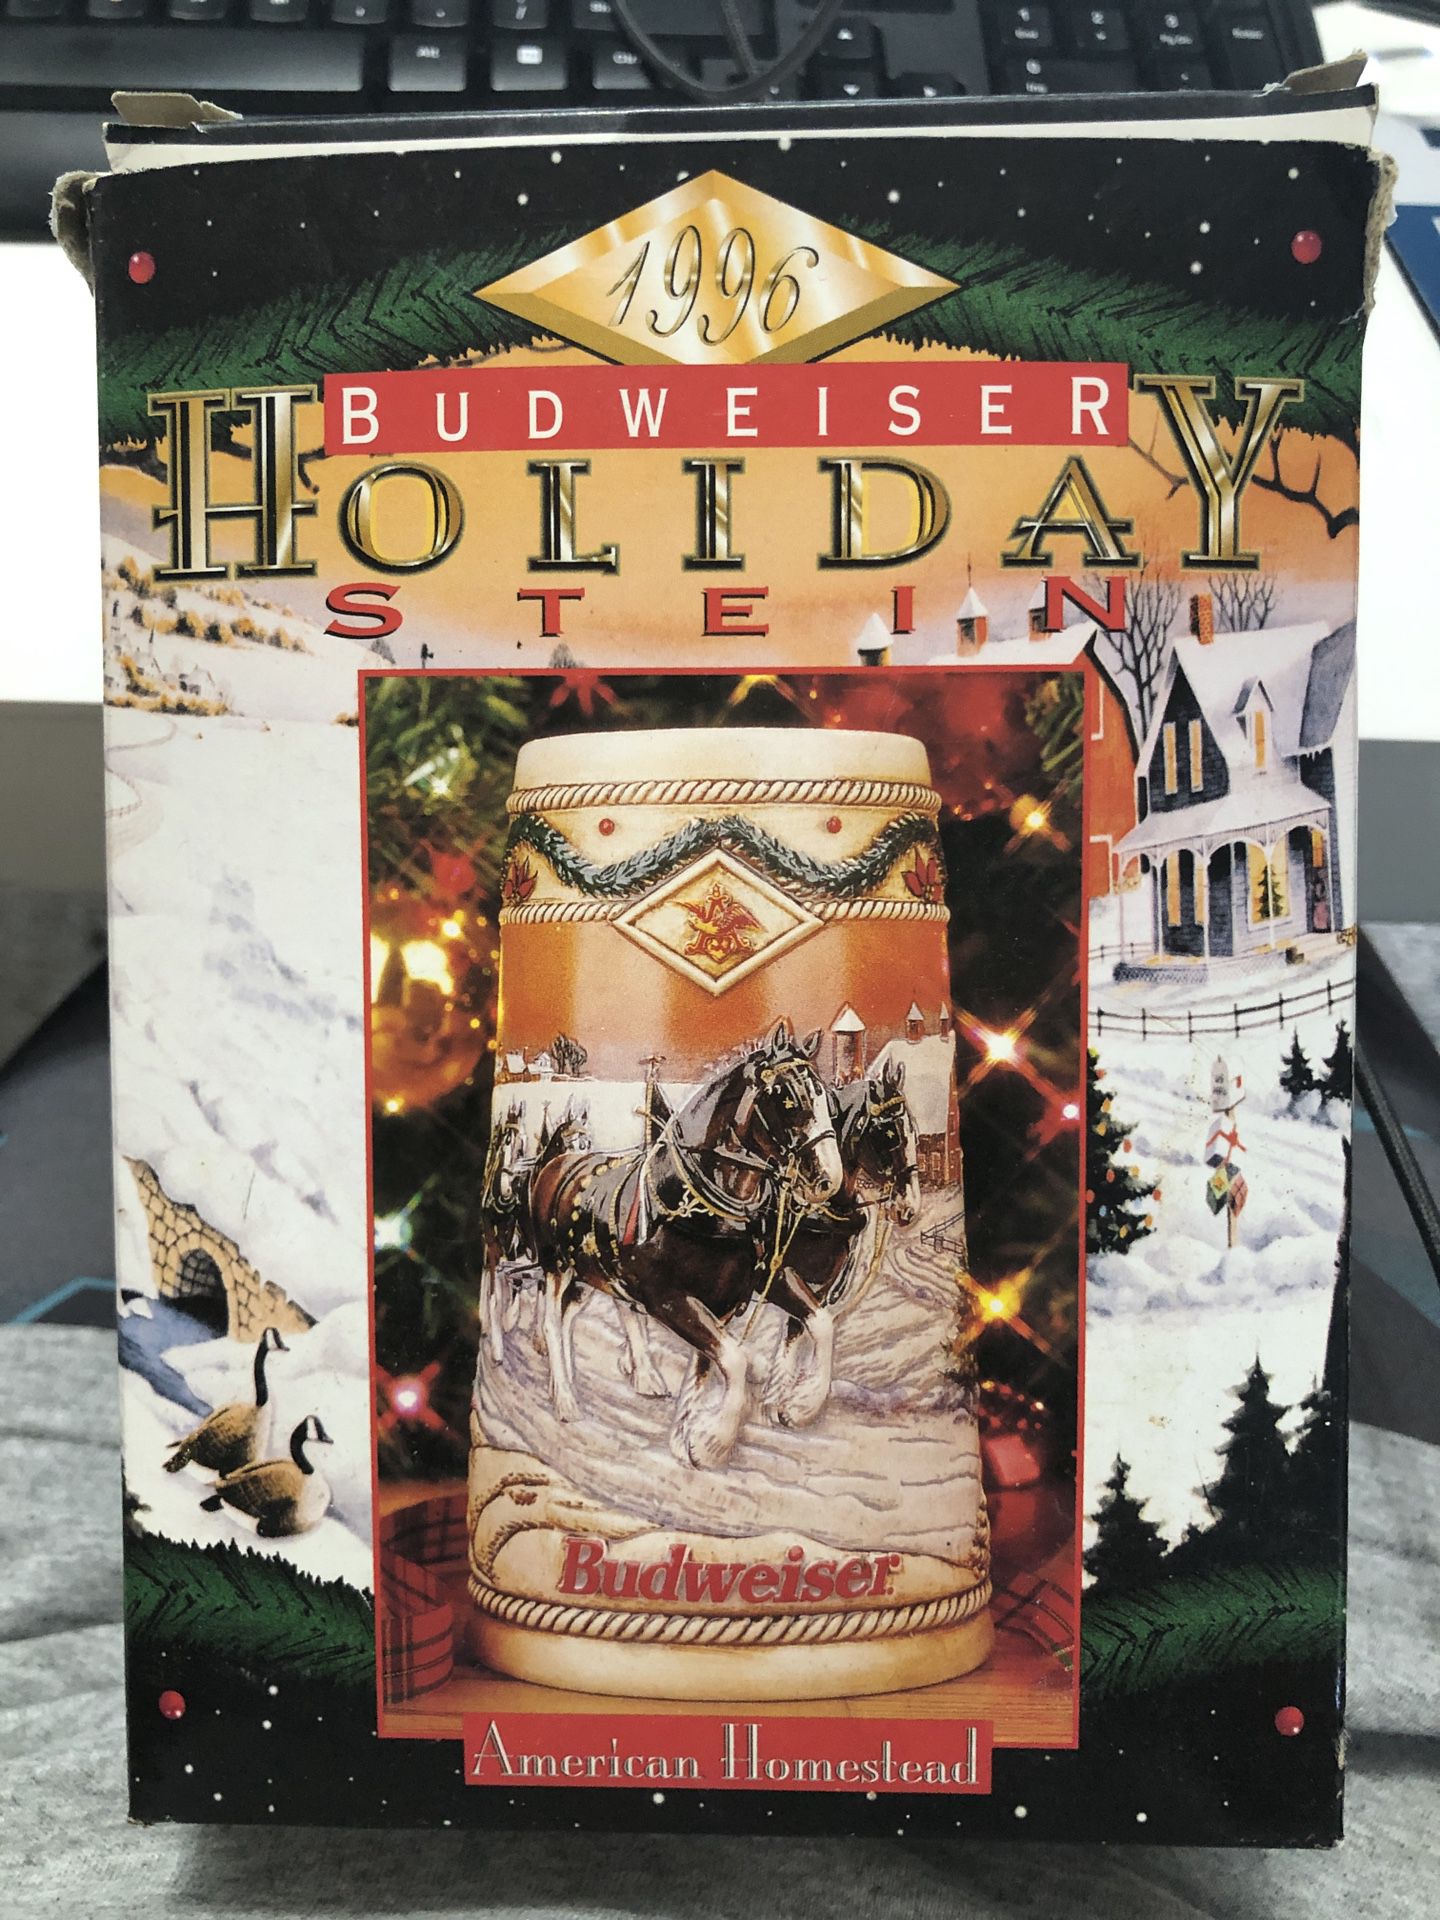 Budweiser 1996 Holiday beer stein, American homestead by ceramarte